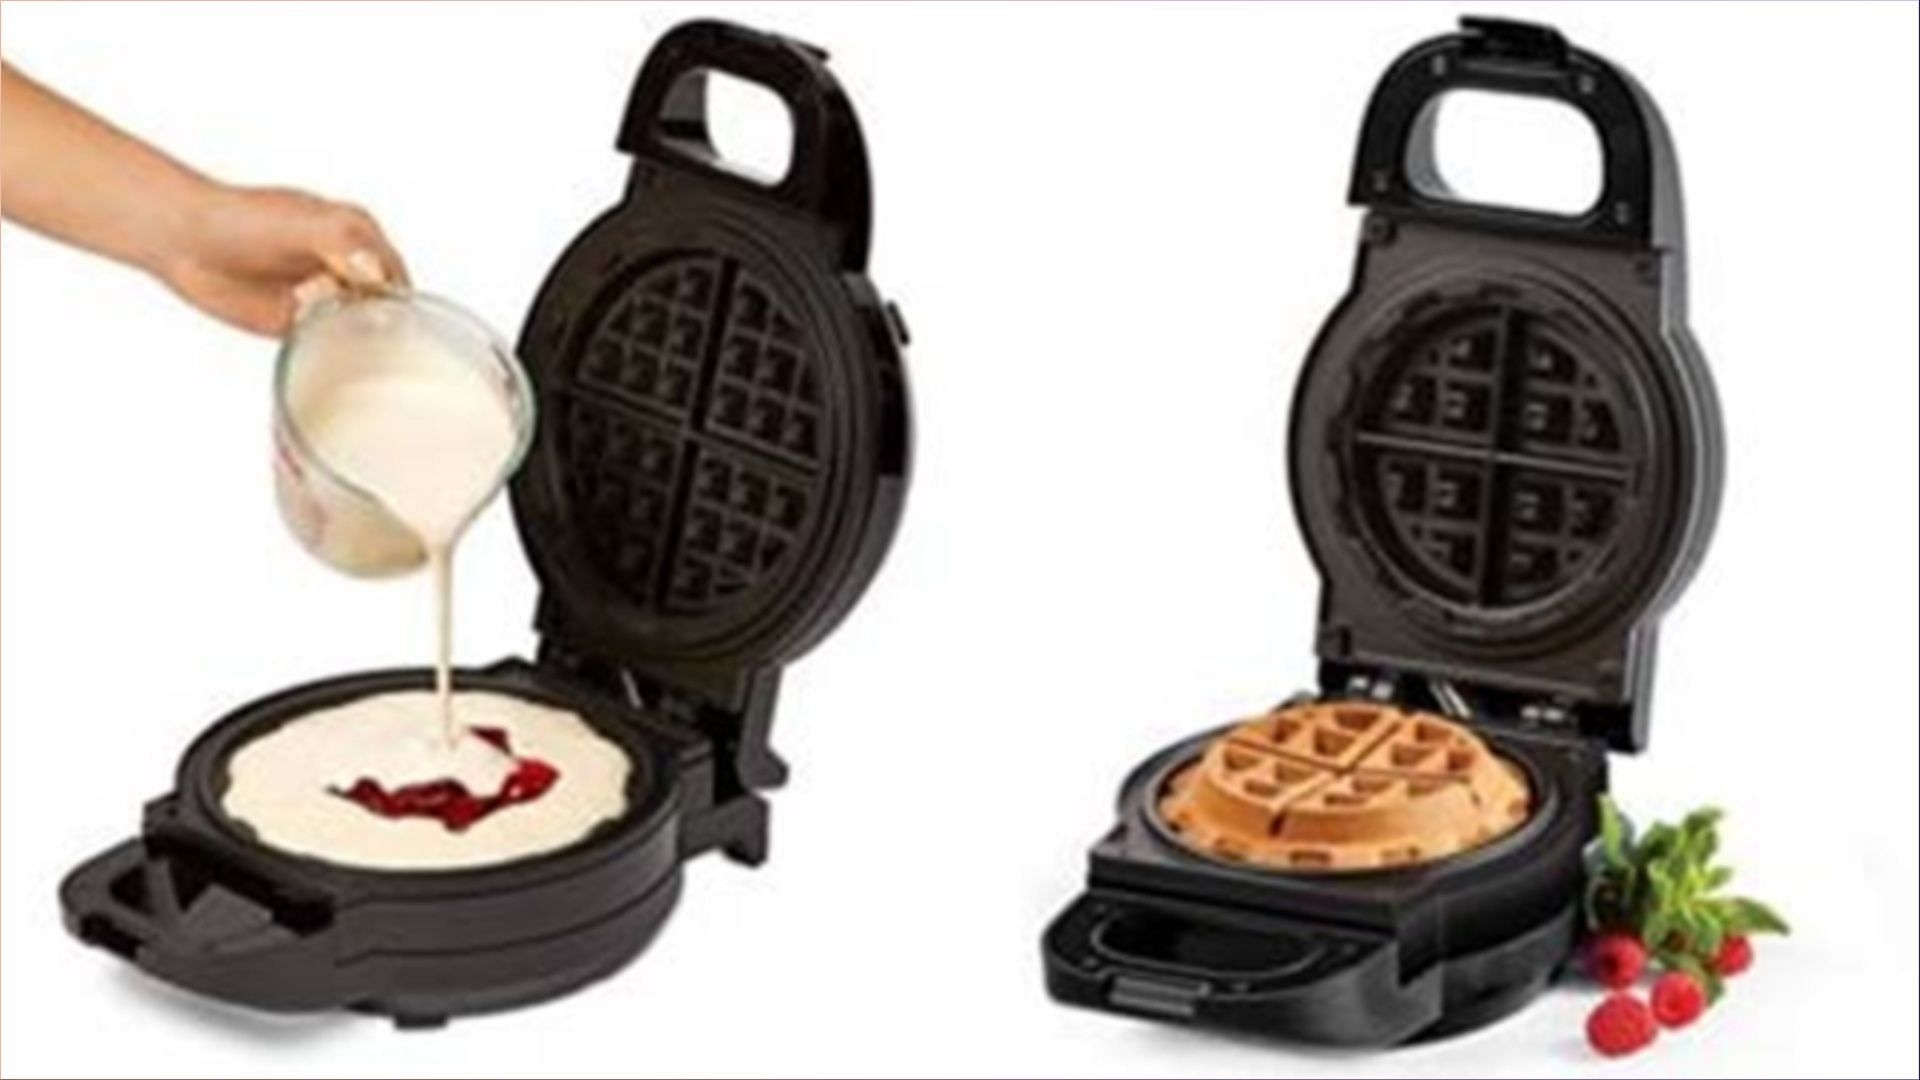 The recalled PowerXL Stuffed Wafflizer waffle makers pose burn hazard concerns (Image via CPSC/Health Canada)